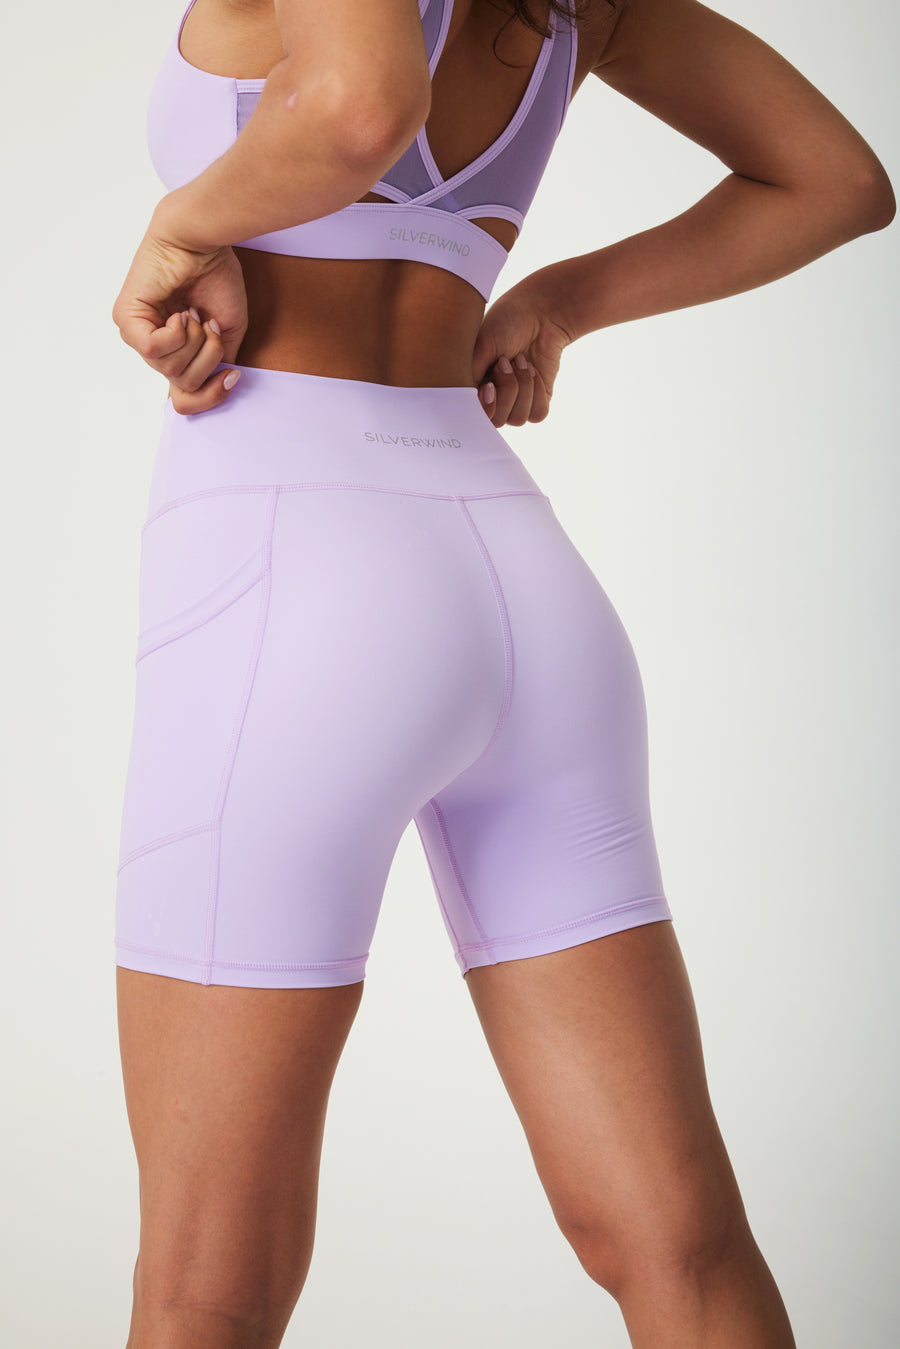 ButterySoft High-waisted bike shorts- Lilac